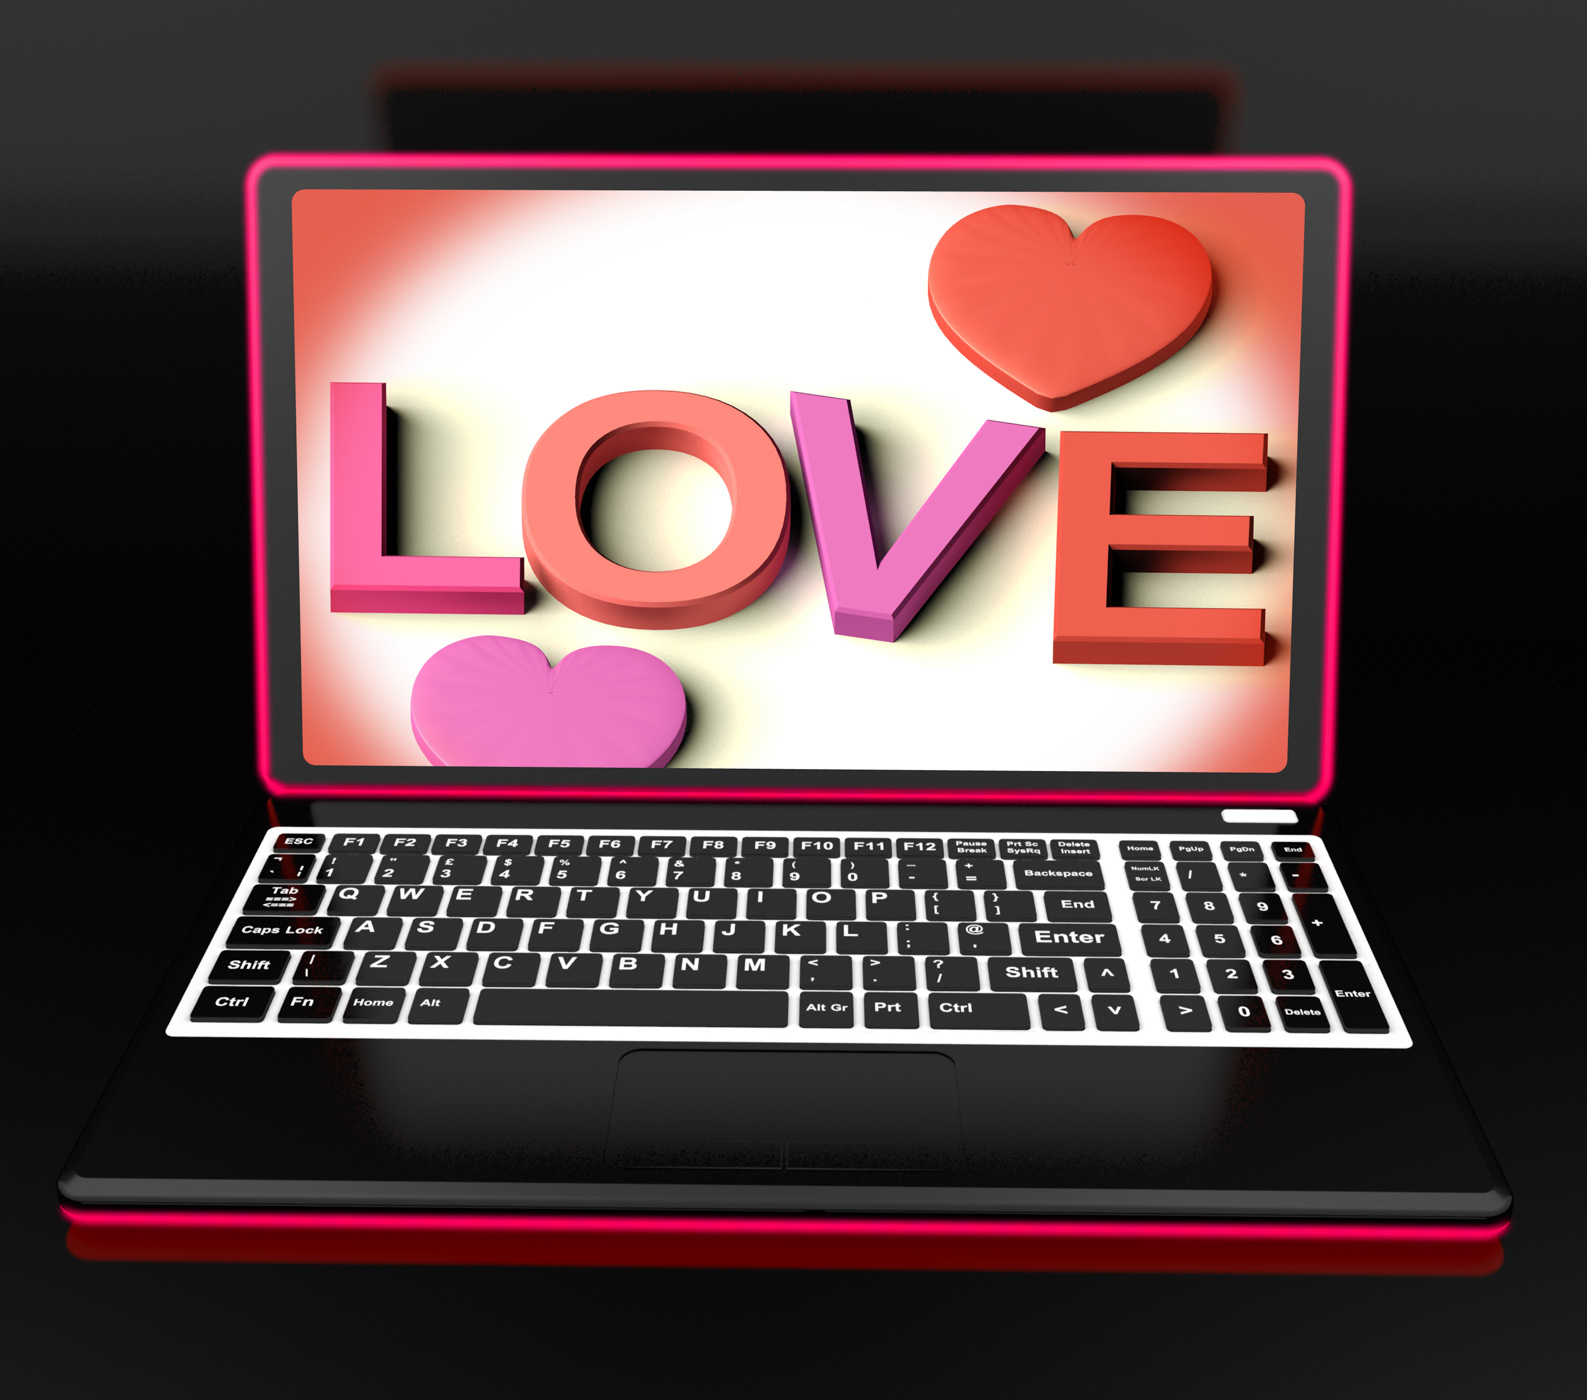 Love on laptop shows romance photo